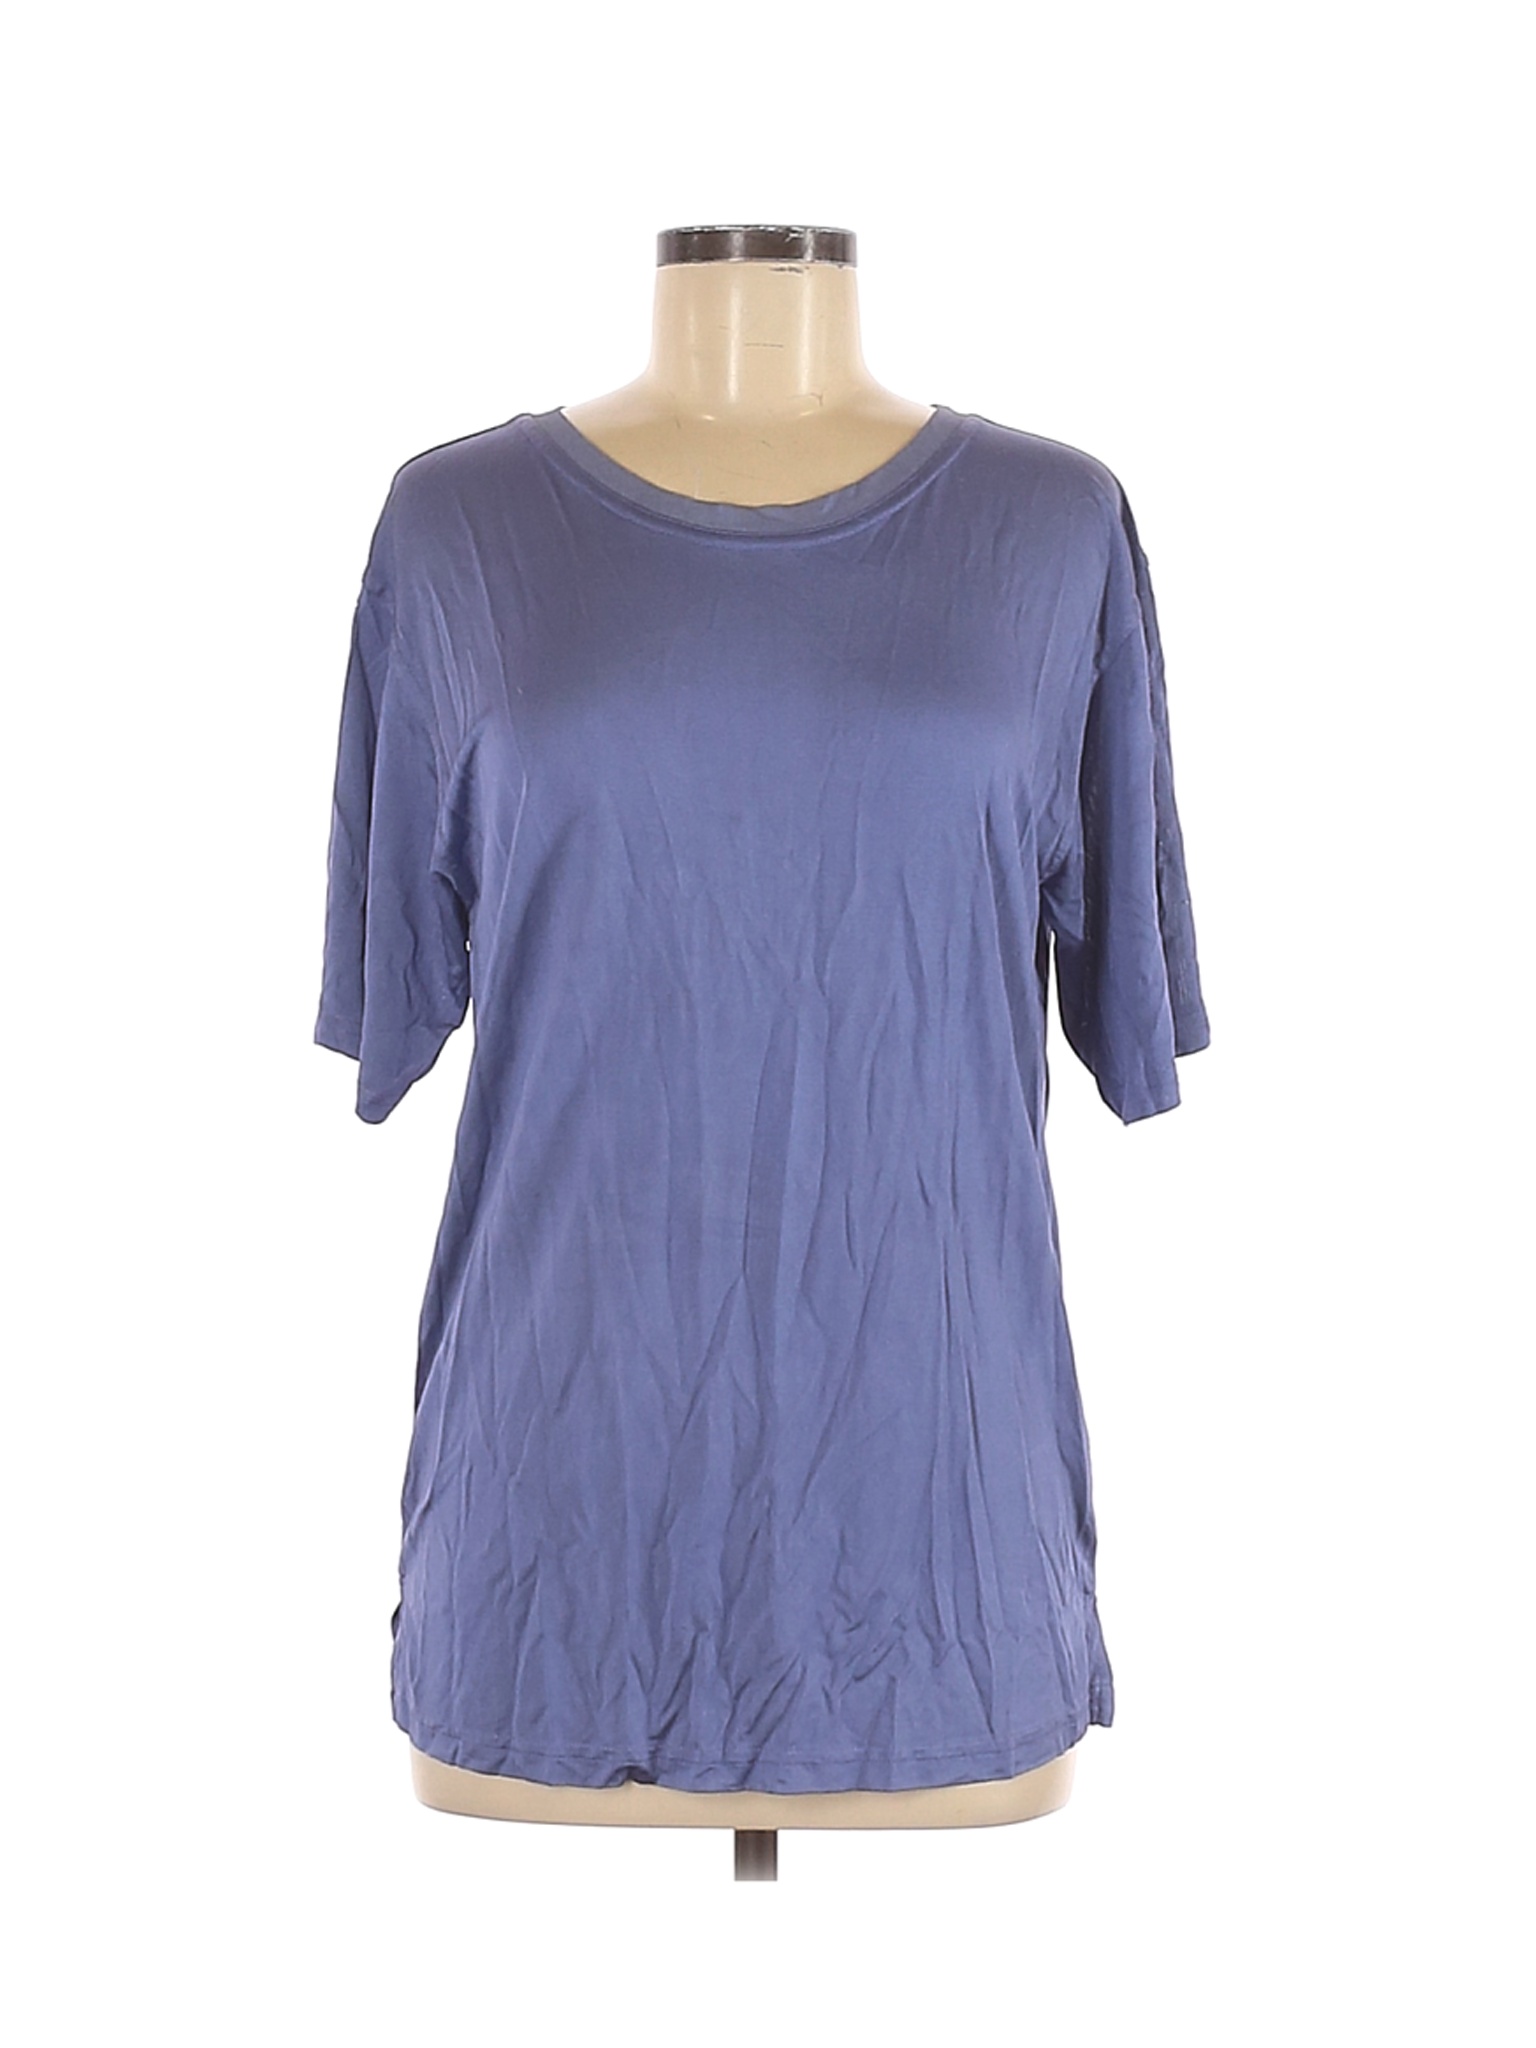 The Limited Women Purple Short Sleeve Top M | eBay